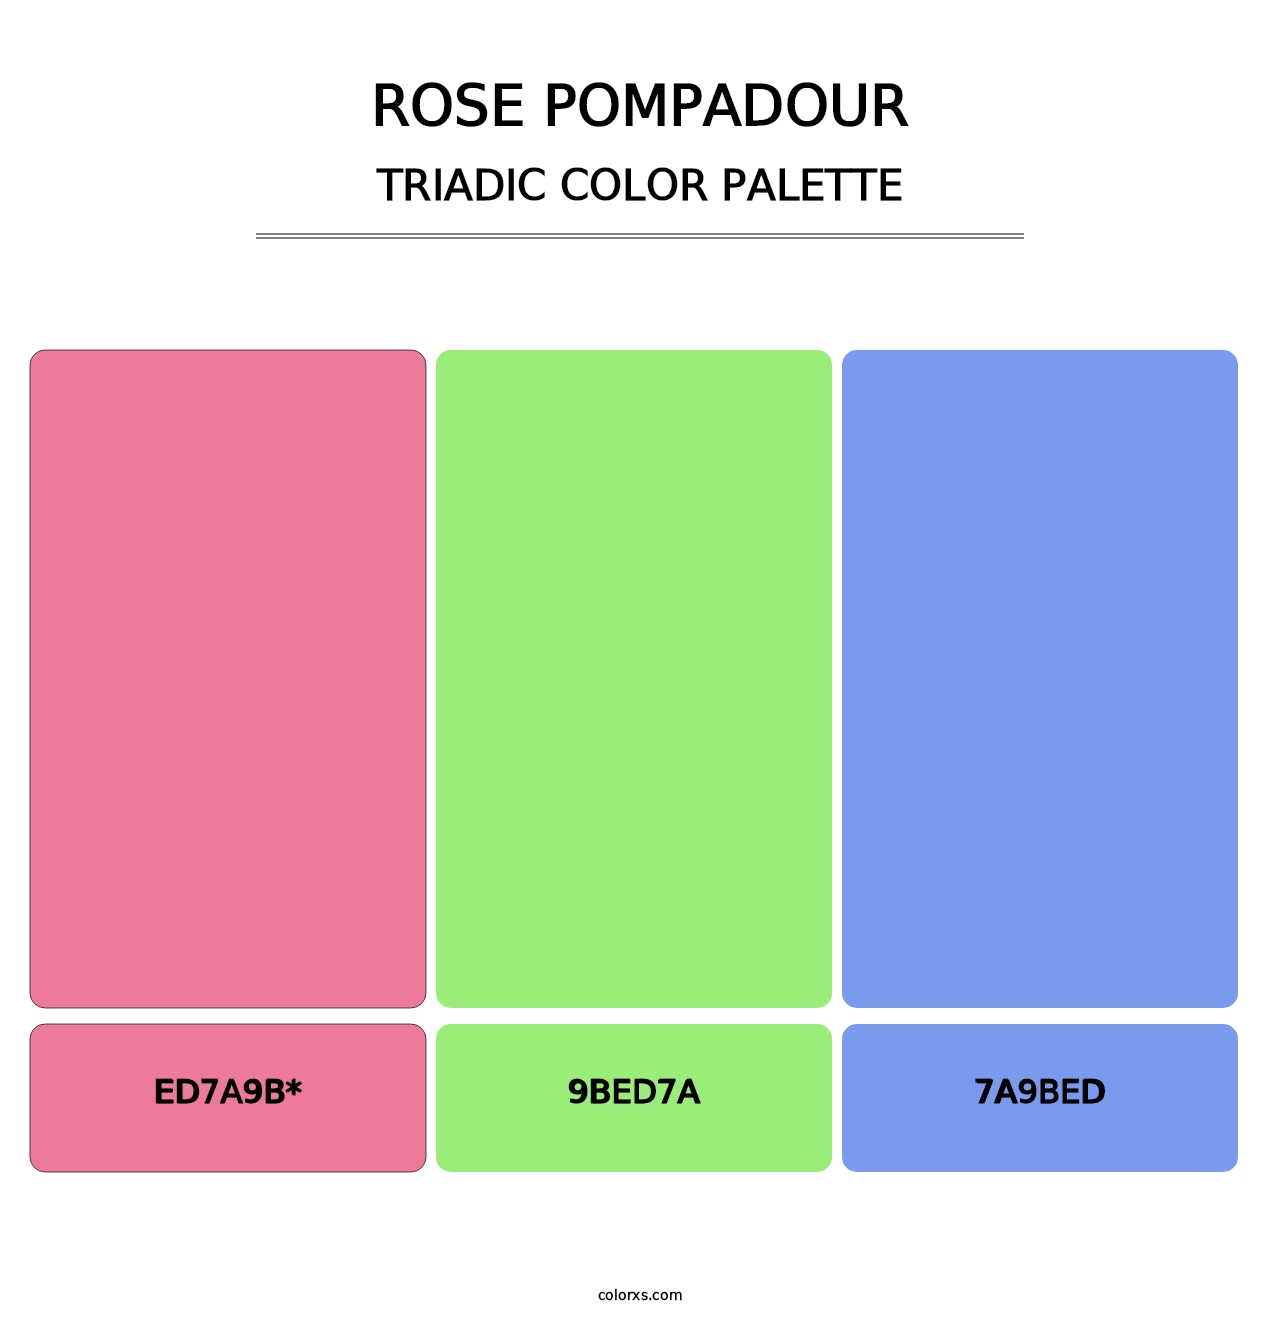 Rose Pompadour - Triadic Color Palette